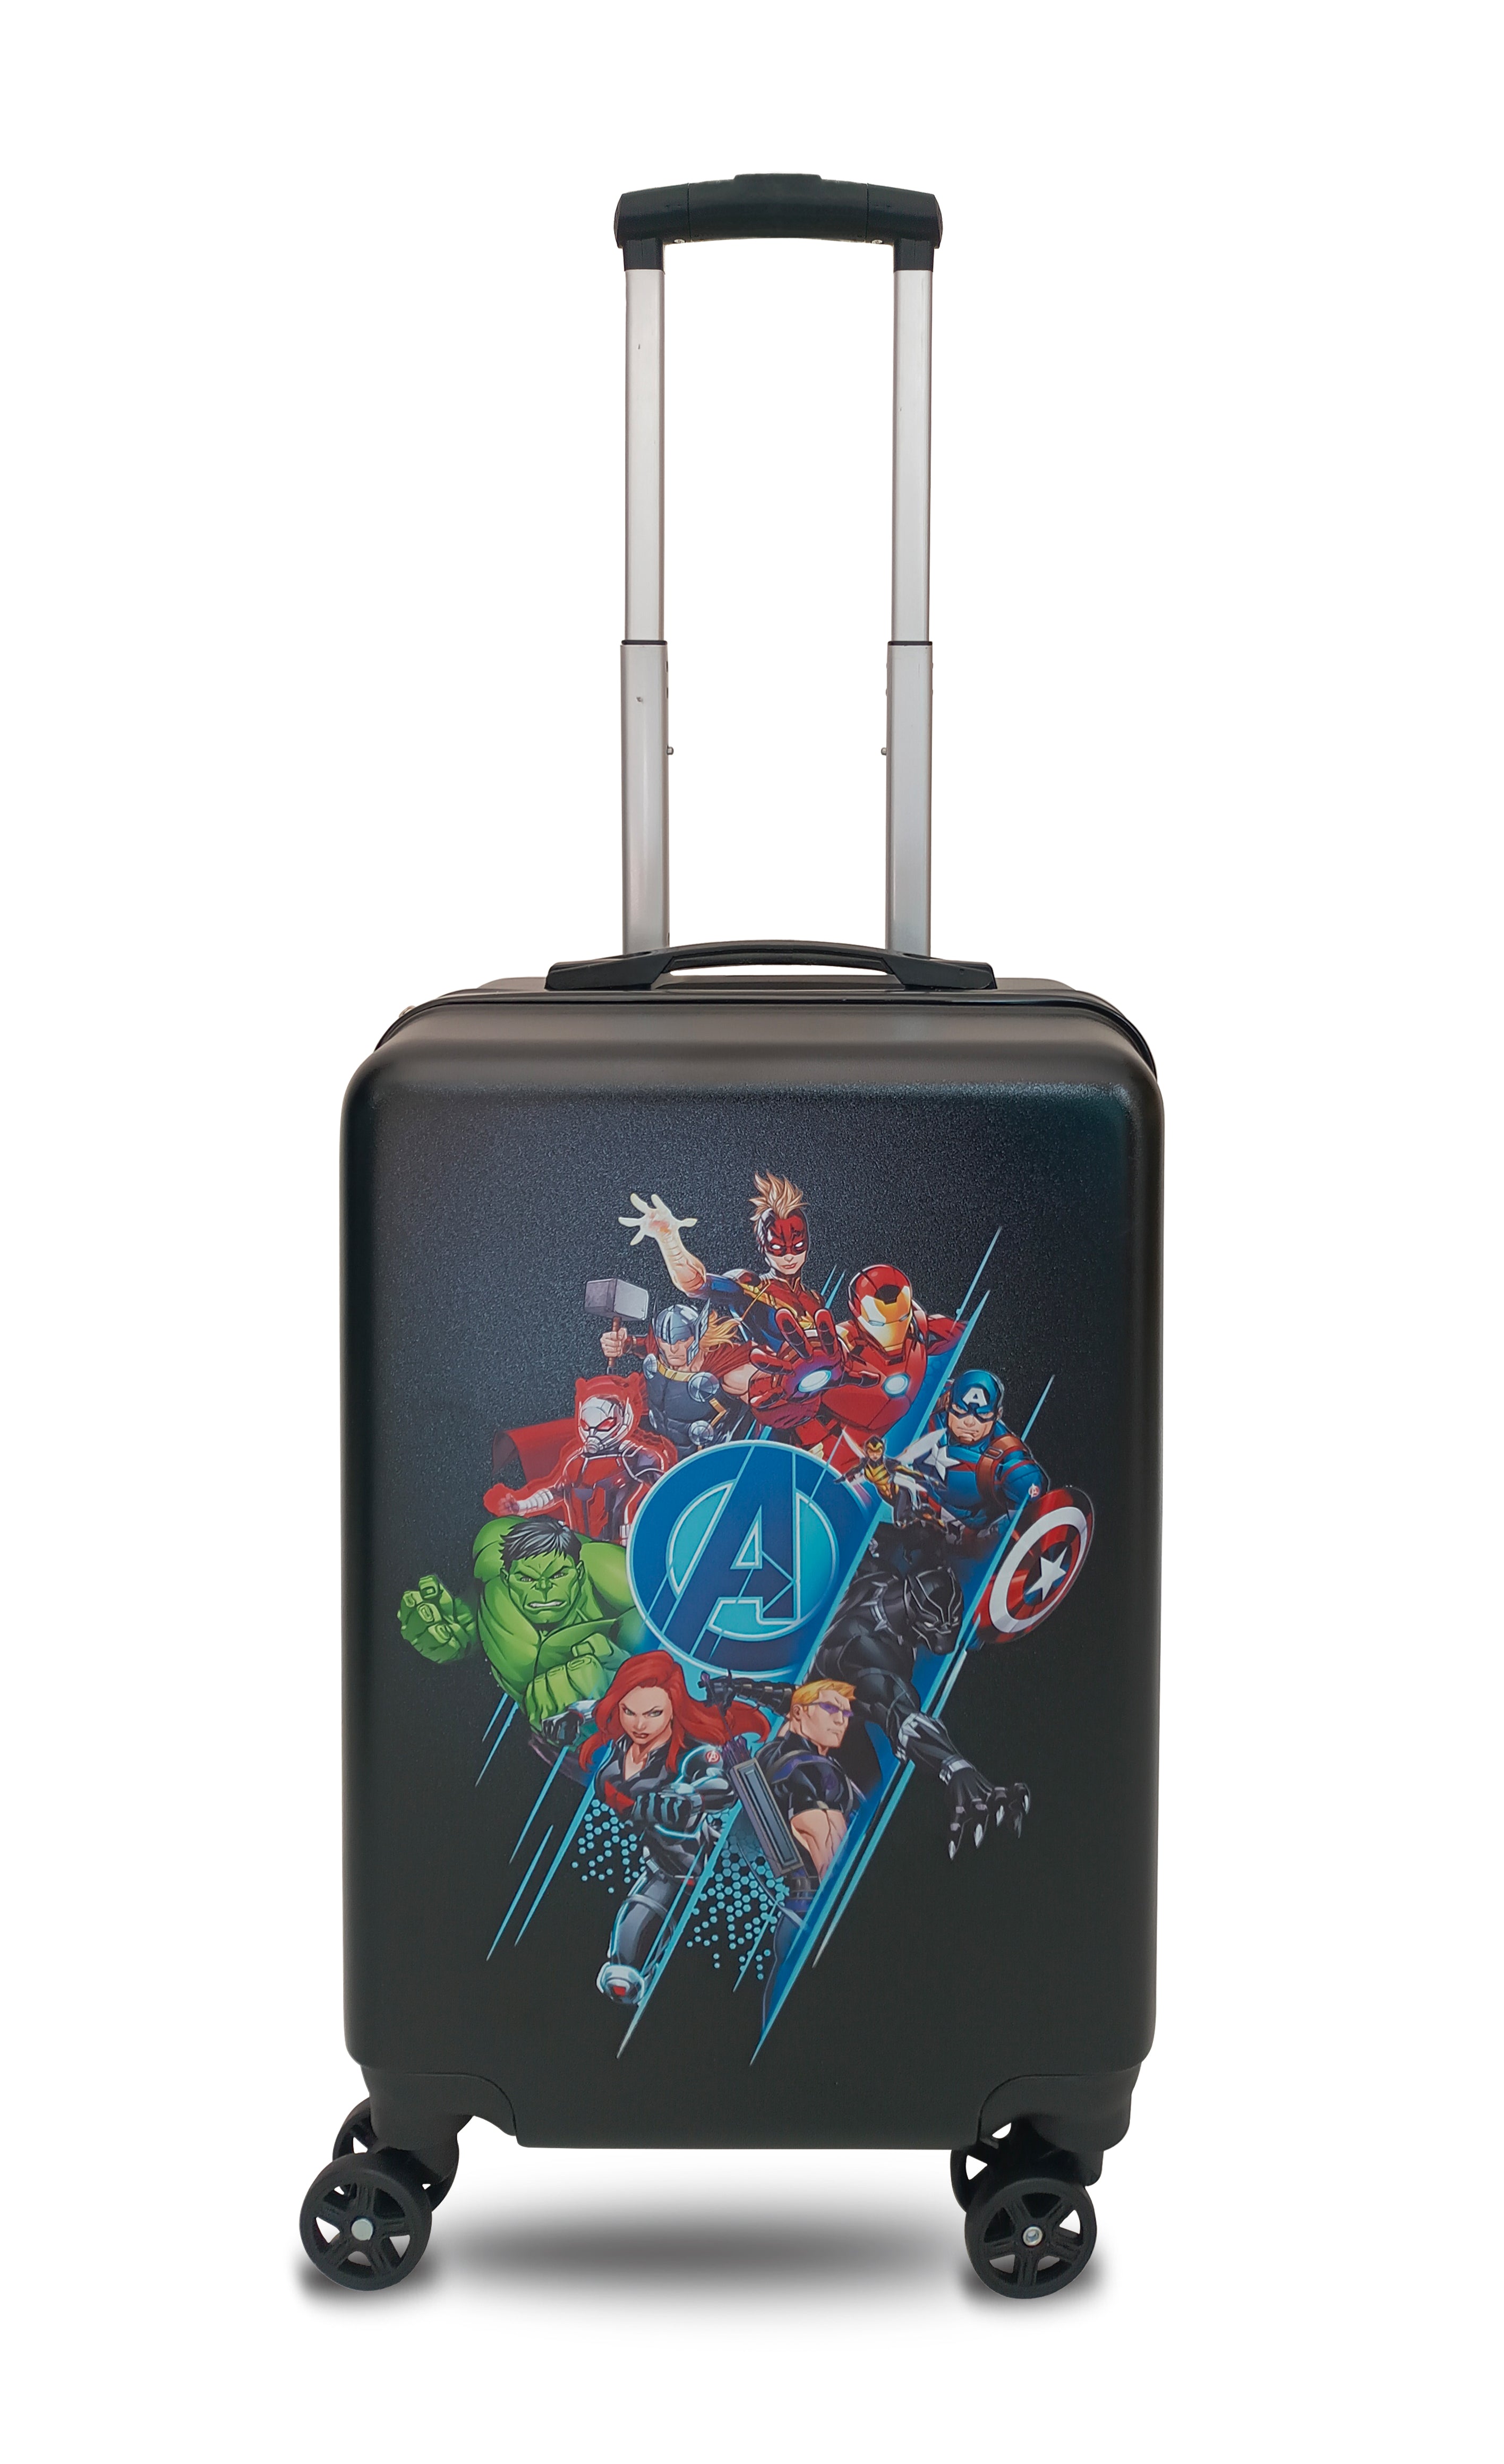 Avengers - 20in MAR095 retro onboard suitcase - Black-1